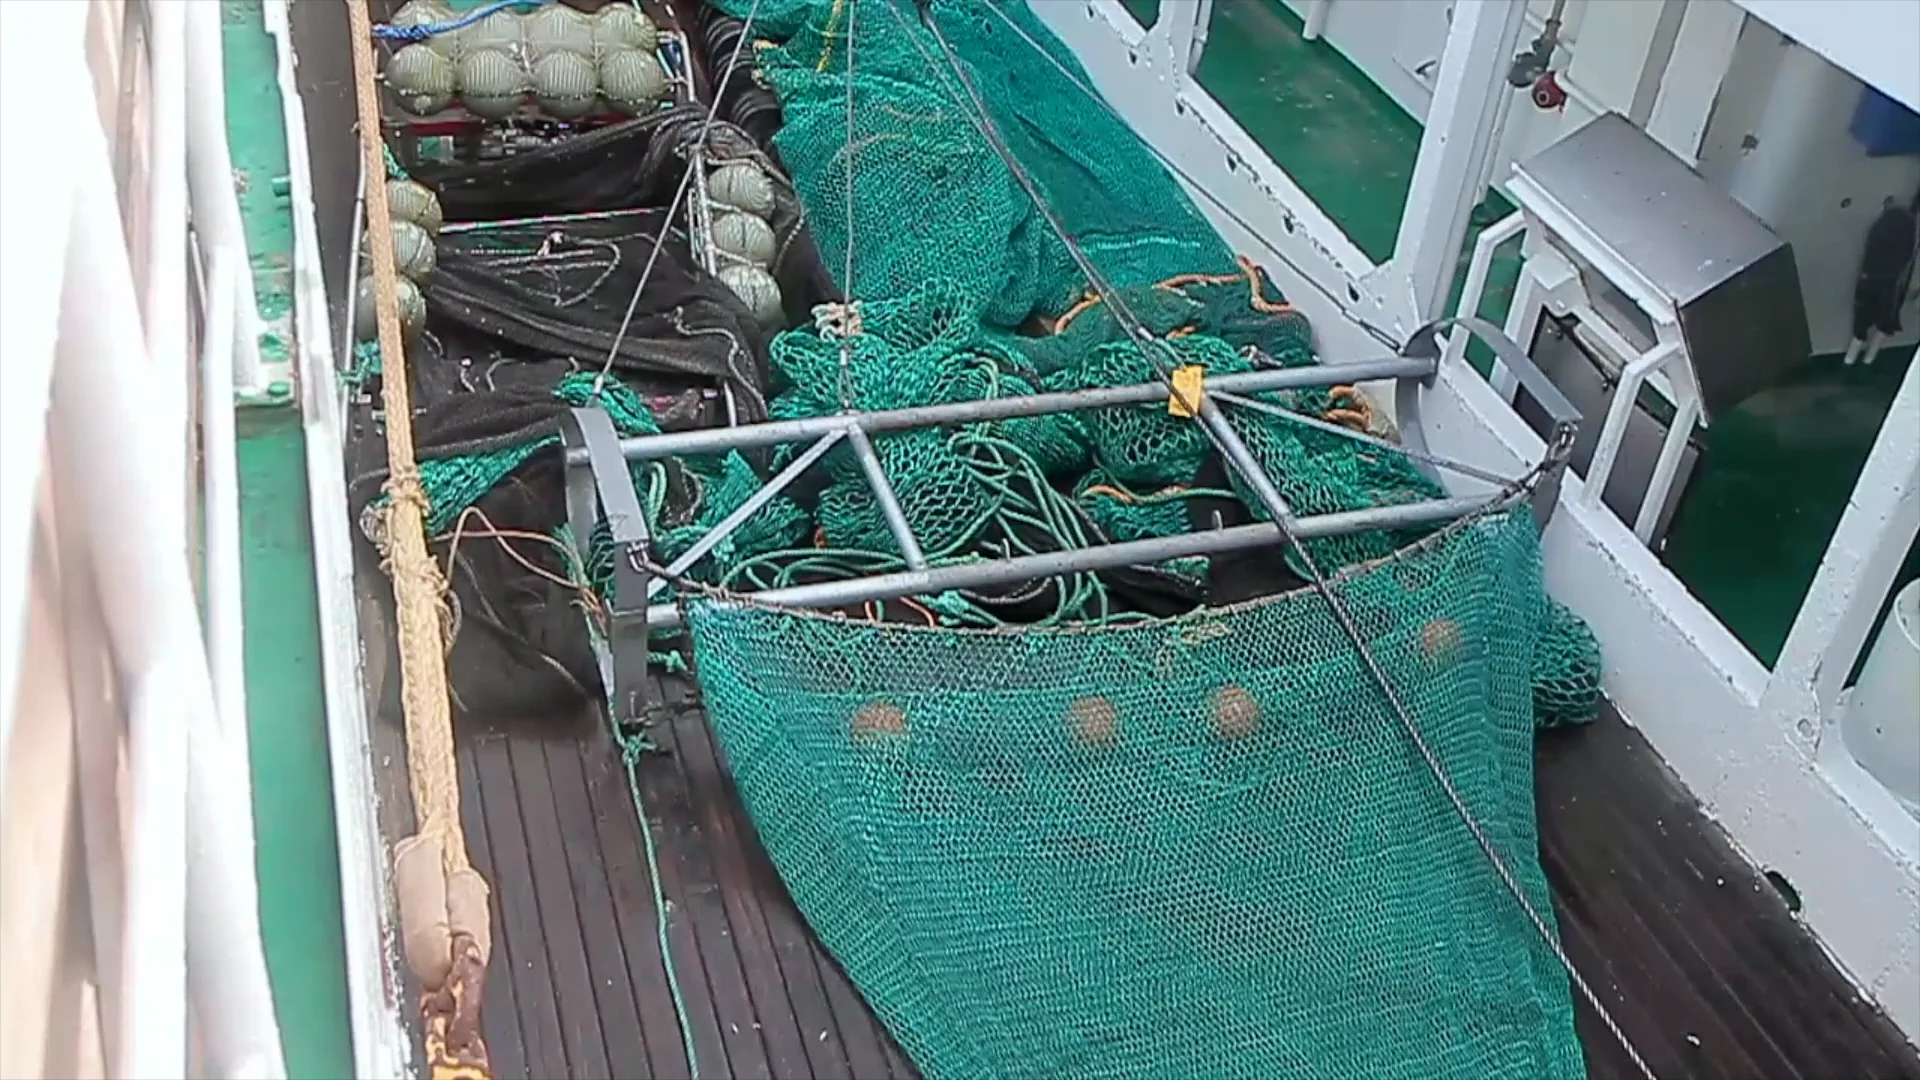 The Beam Trawl on Vimeo